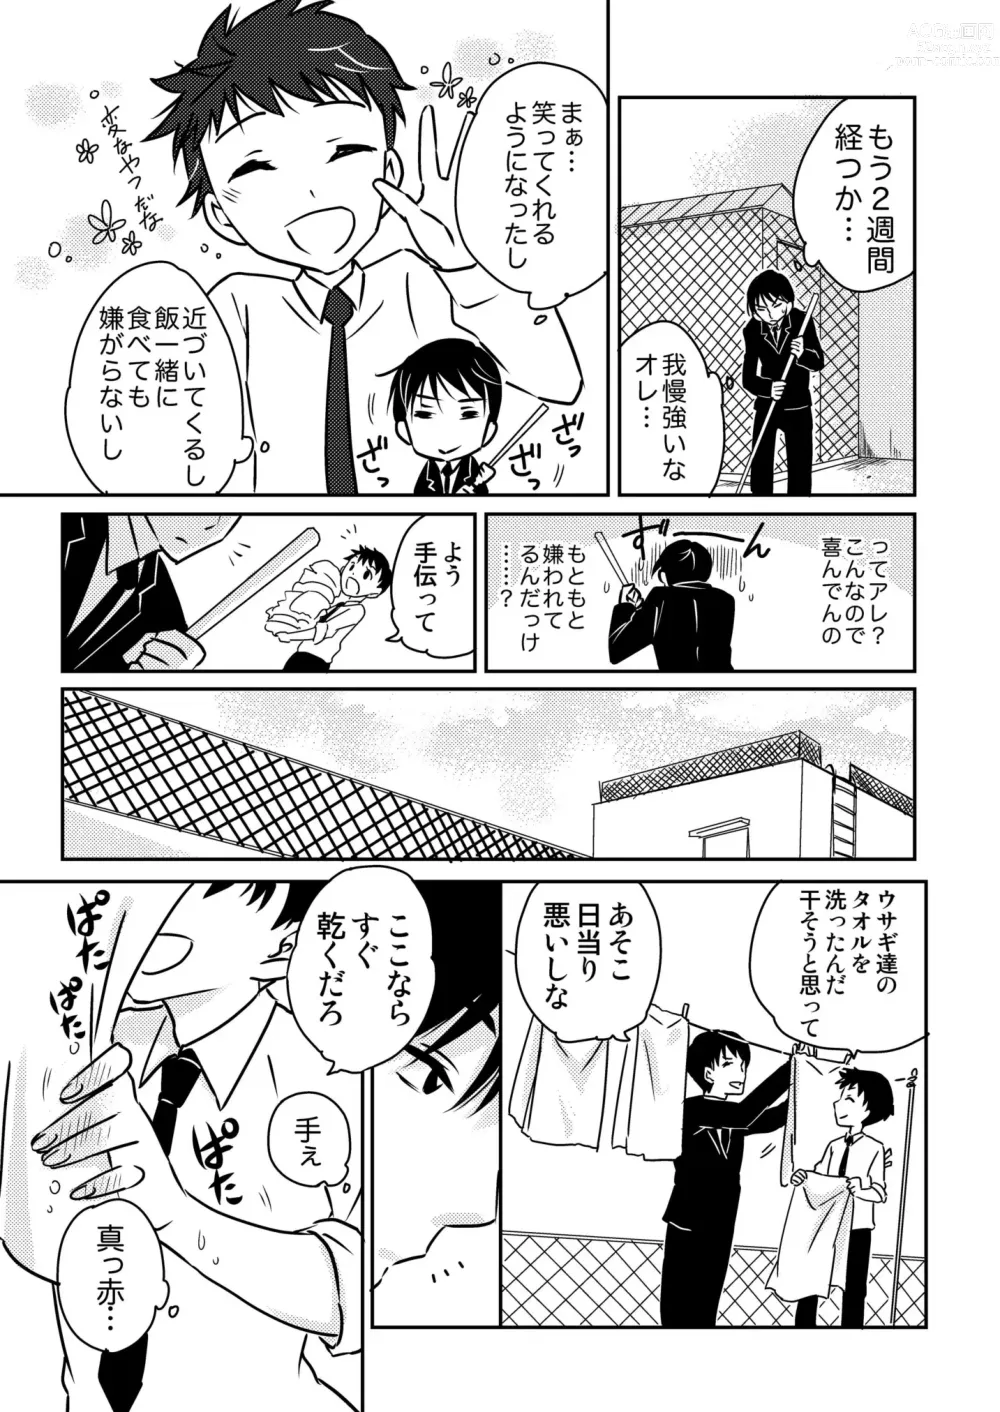 Page 9 of doujinshi Usagi no Koe 3